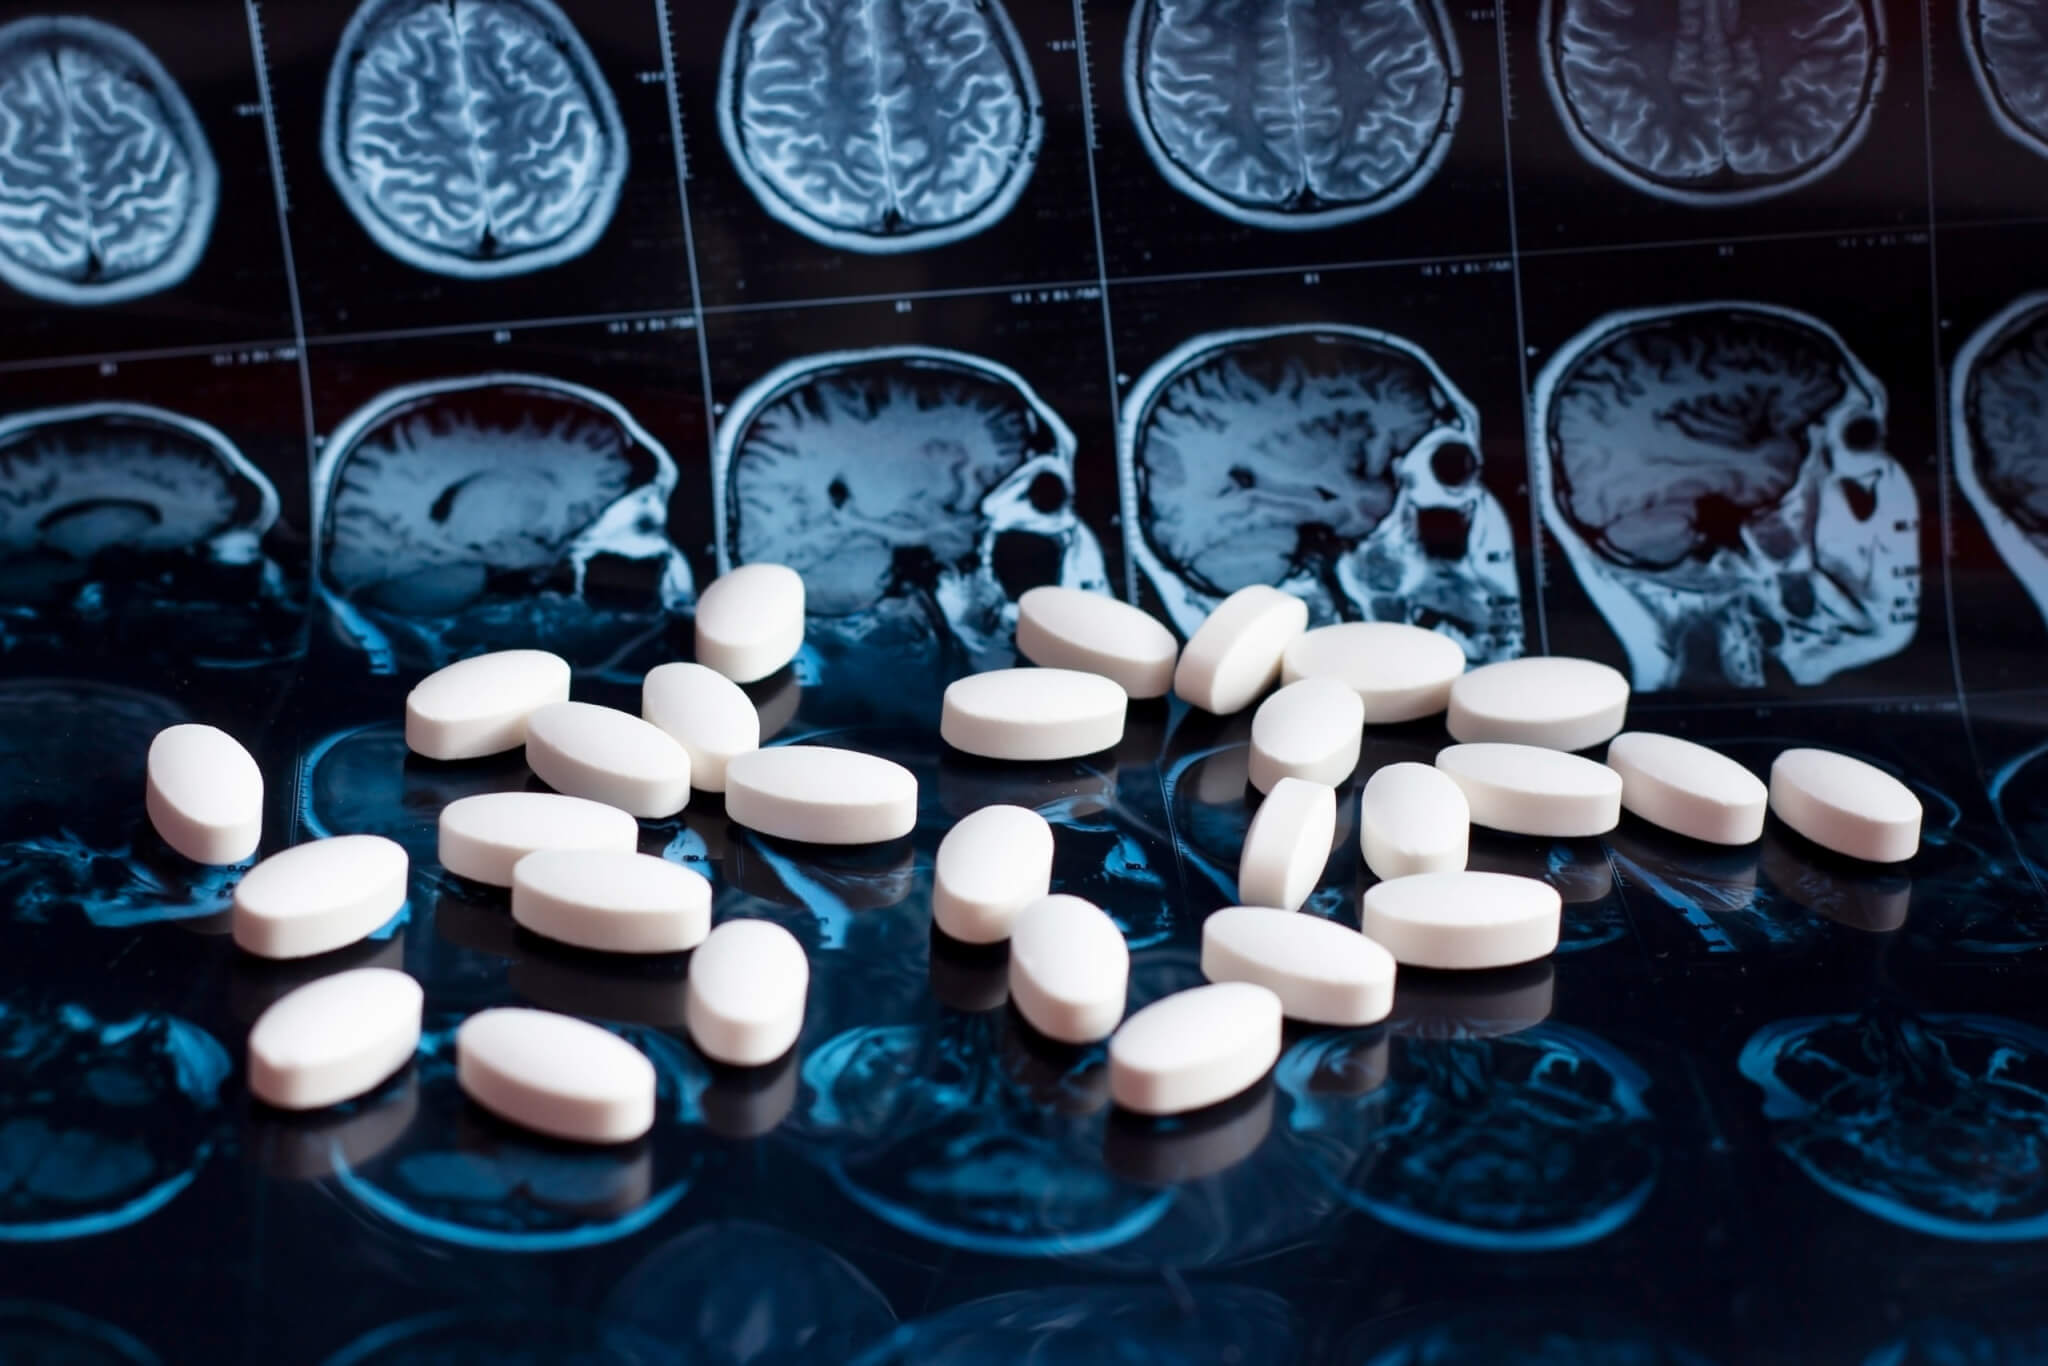 Rexulti Works for Agitation in Alzheimer's, Despite Risks, Says FDA Staff